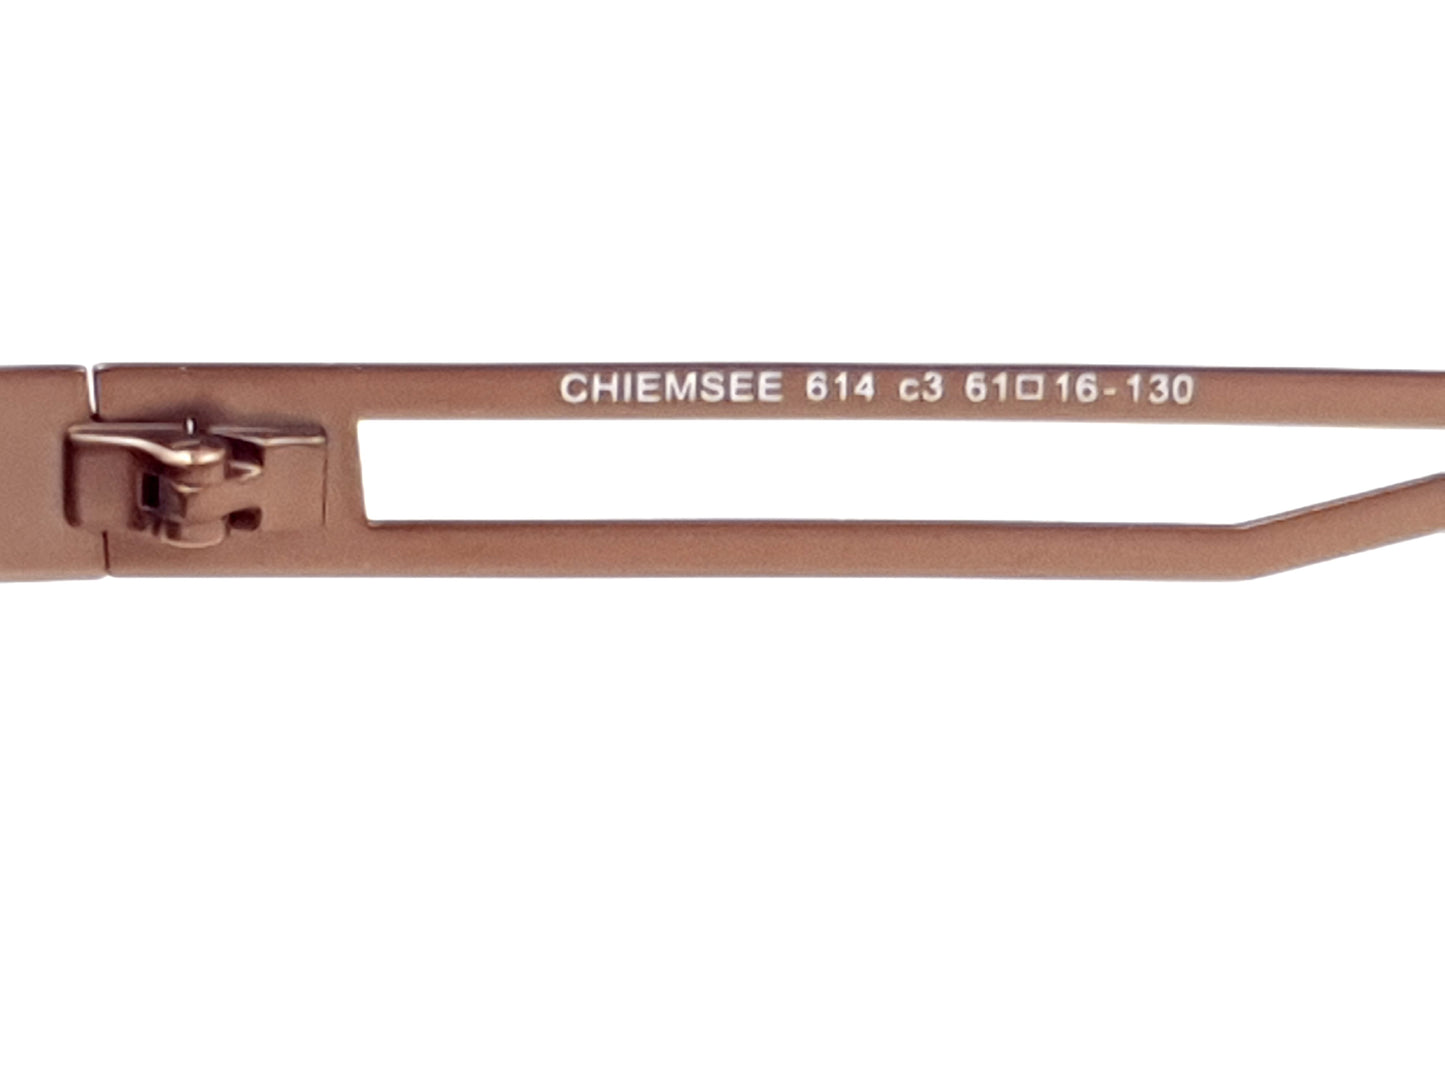 CHIEMSEE 614 c3